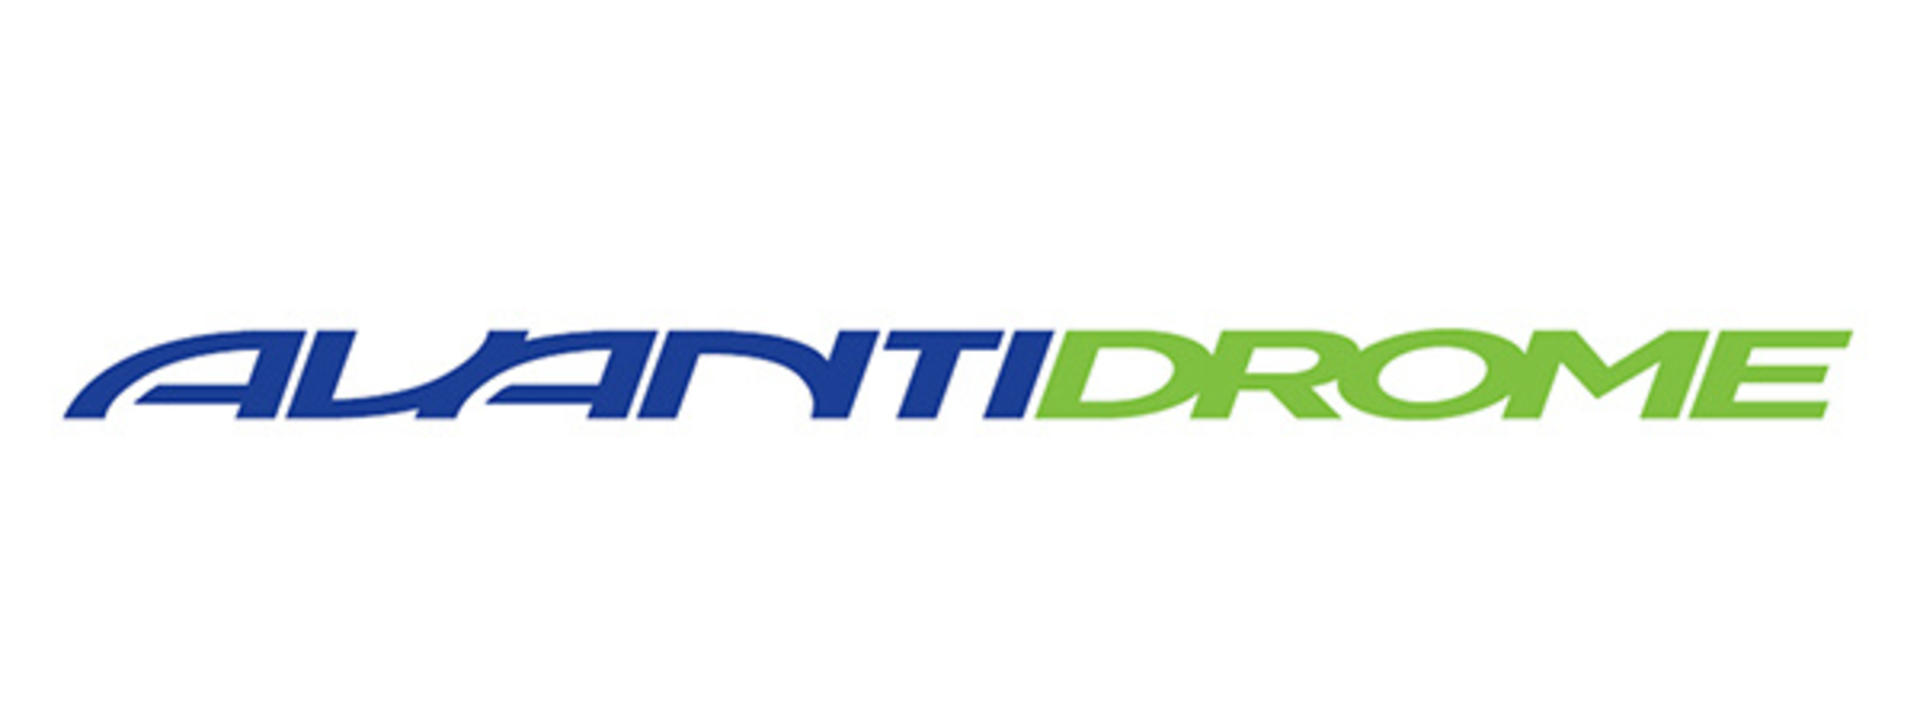 Logo: Avantidrome